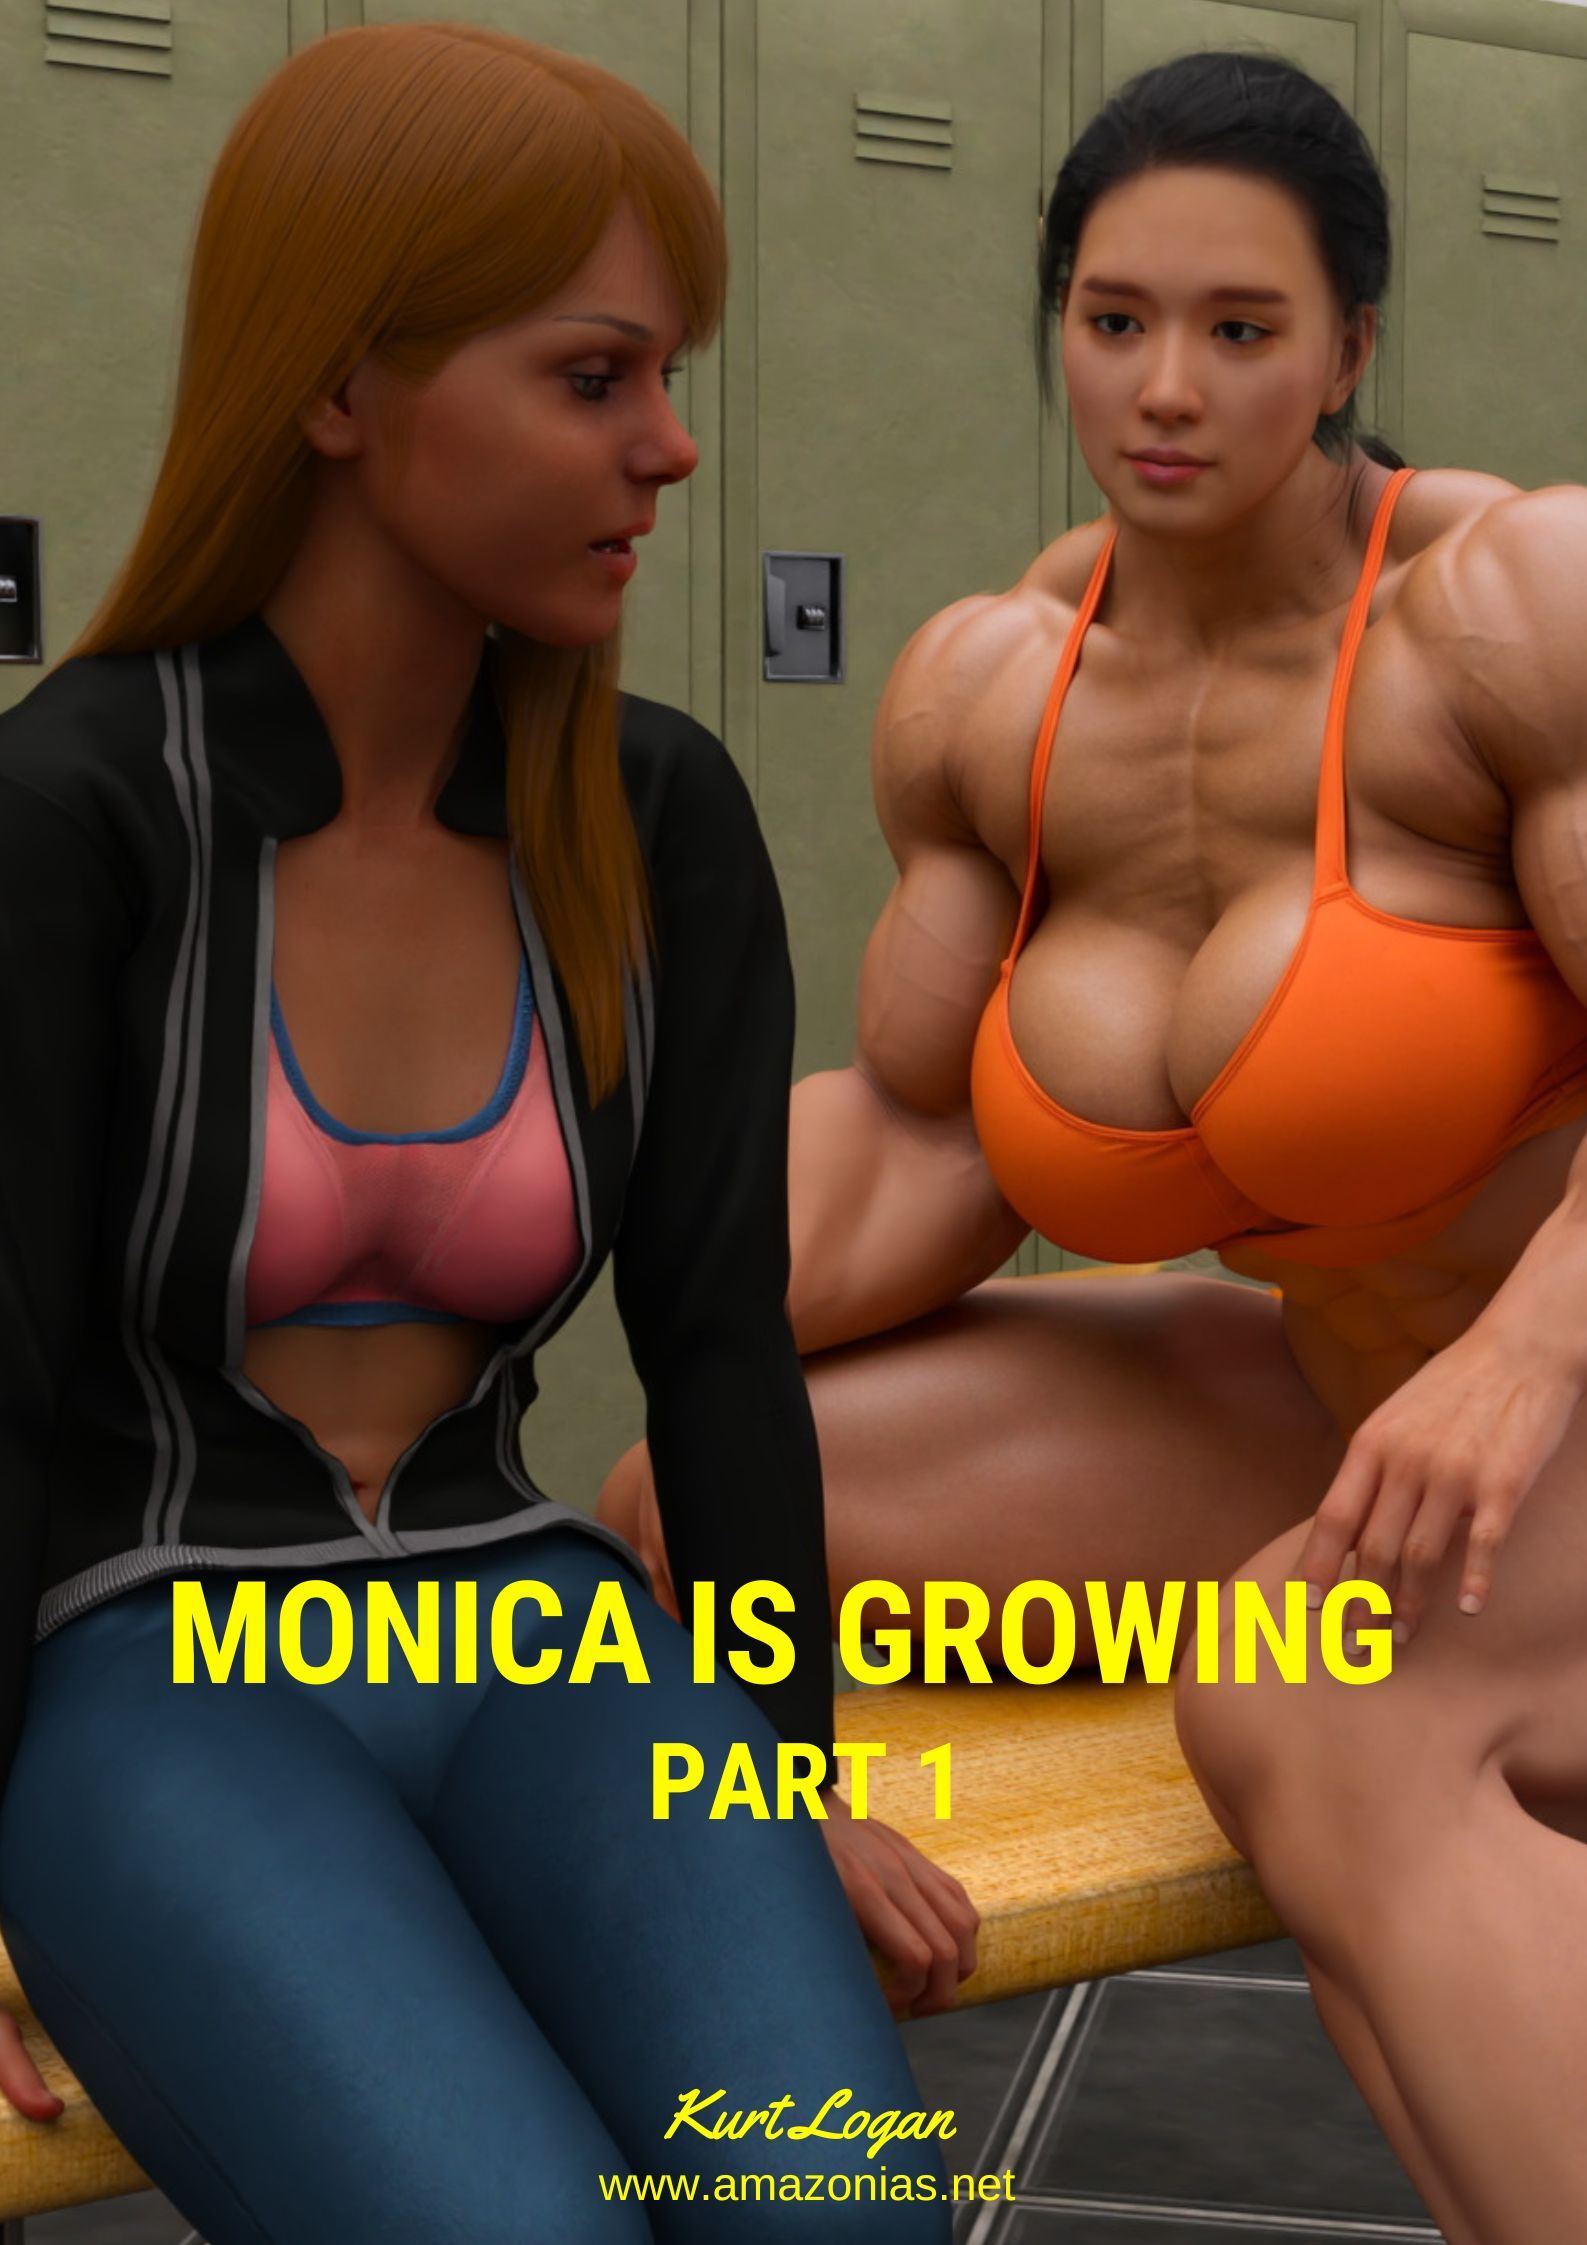 Giantess growth boobs